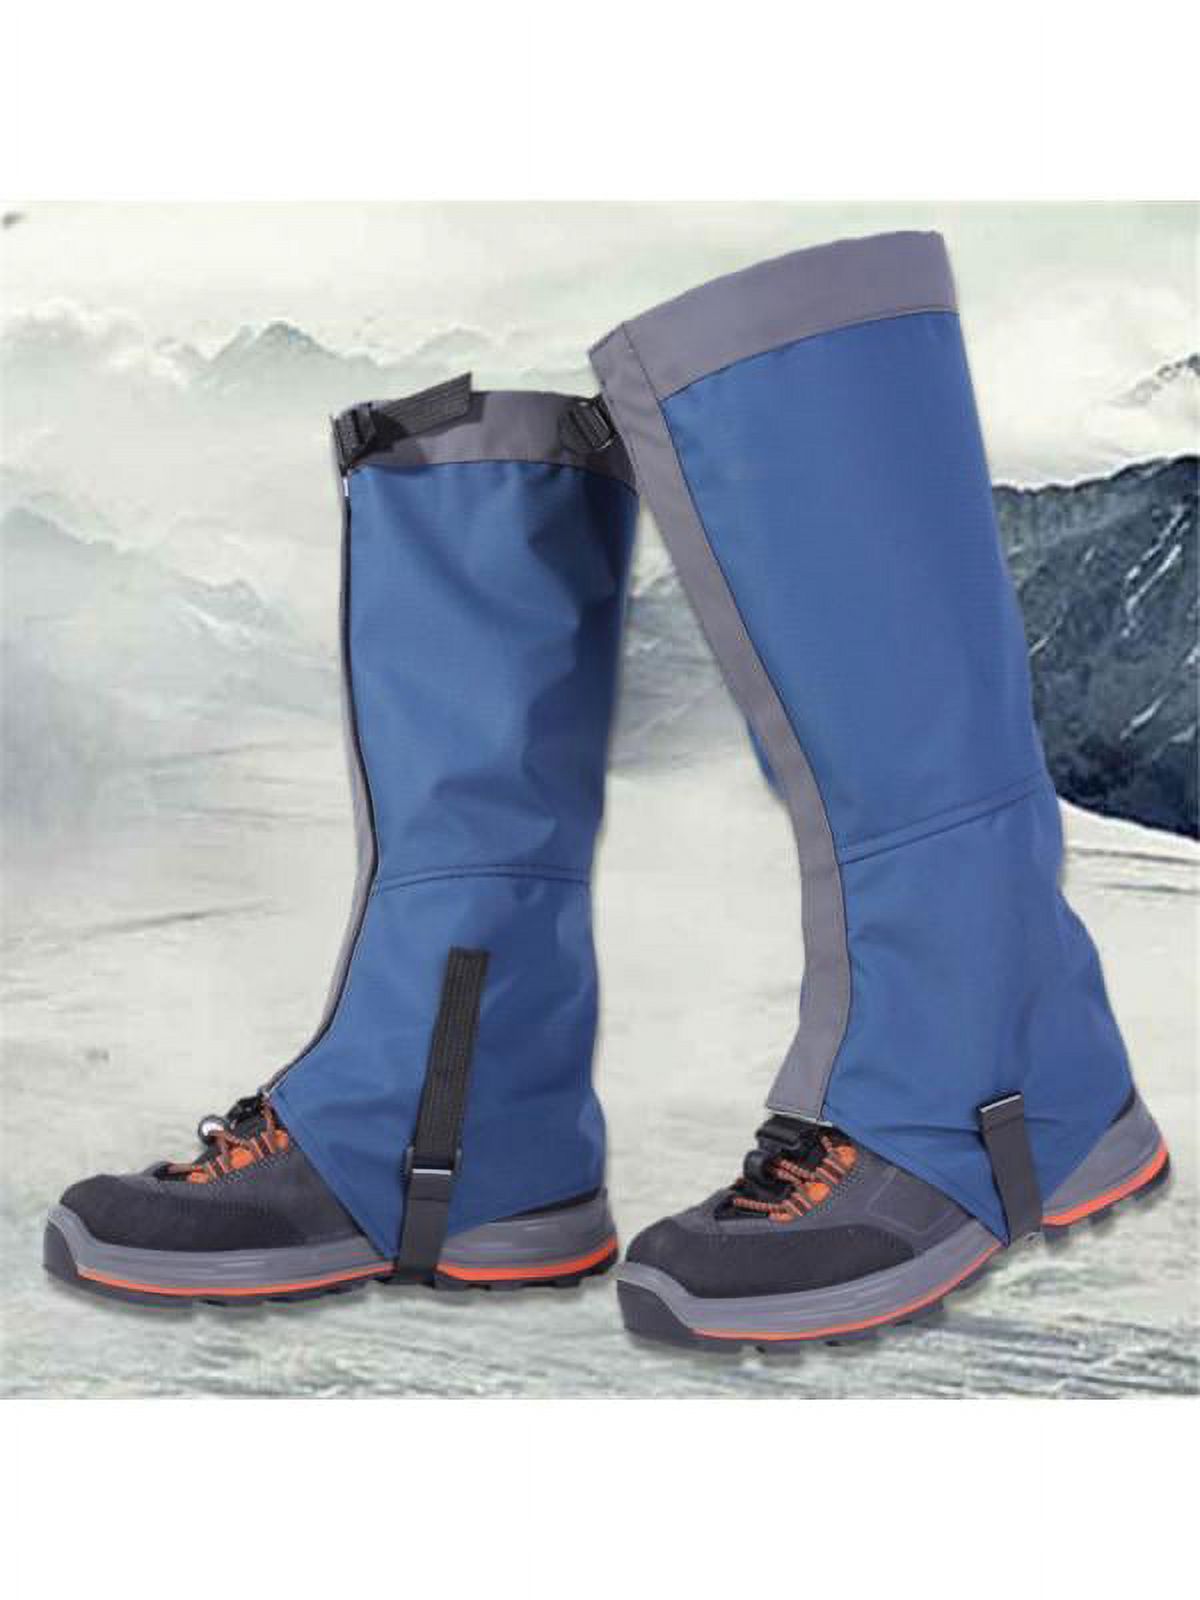 MarinaVida Mountain Hiking Hunting Boot Gaiters Waterproof Snow Snake High Leg Shoes Cover - image 1 of 6